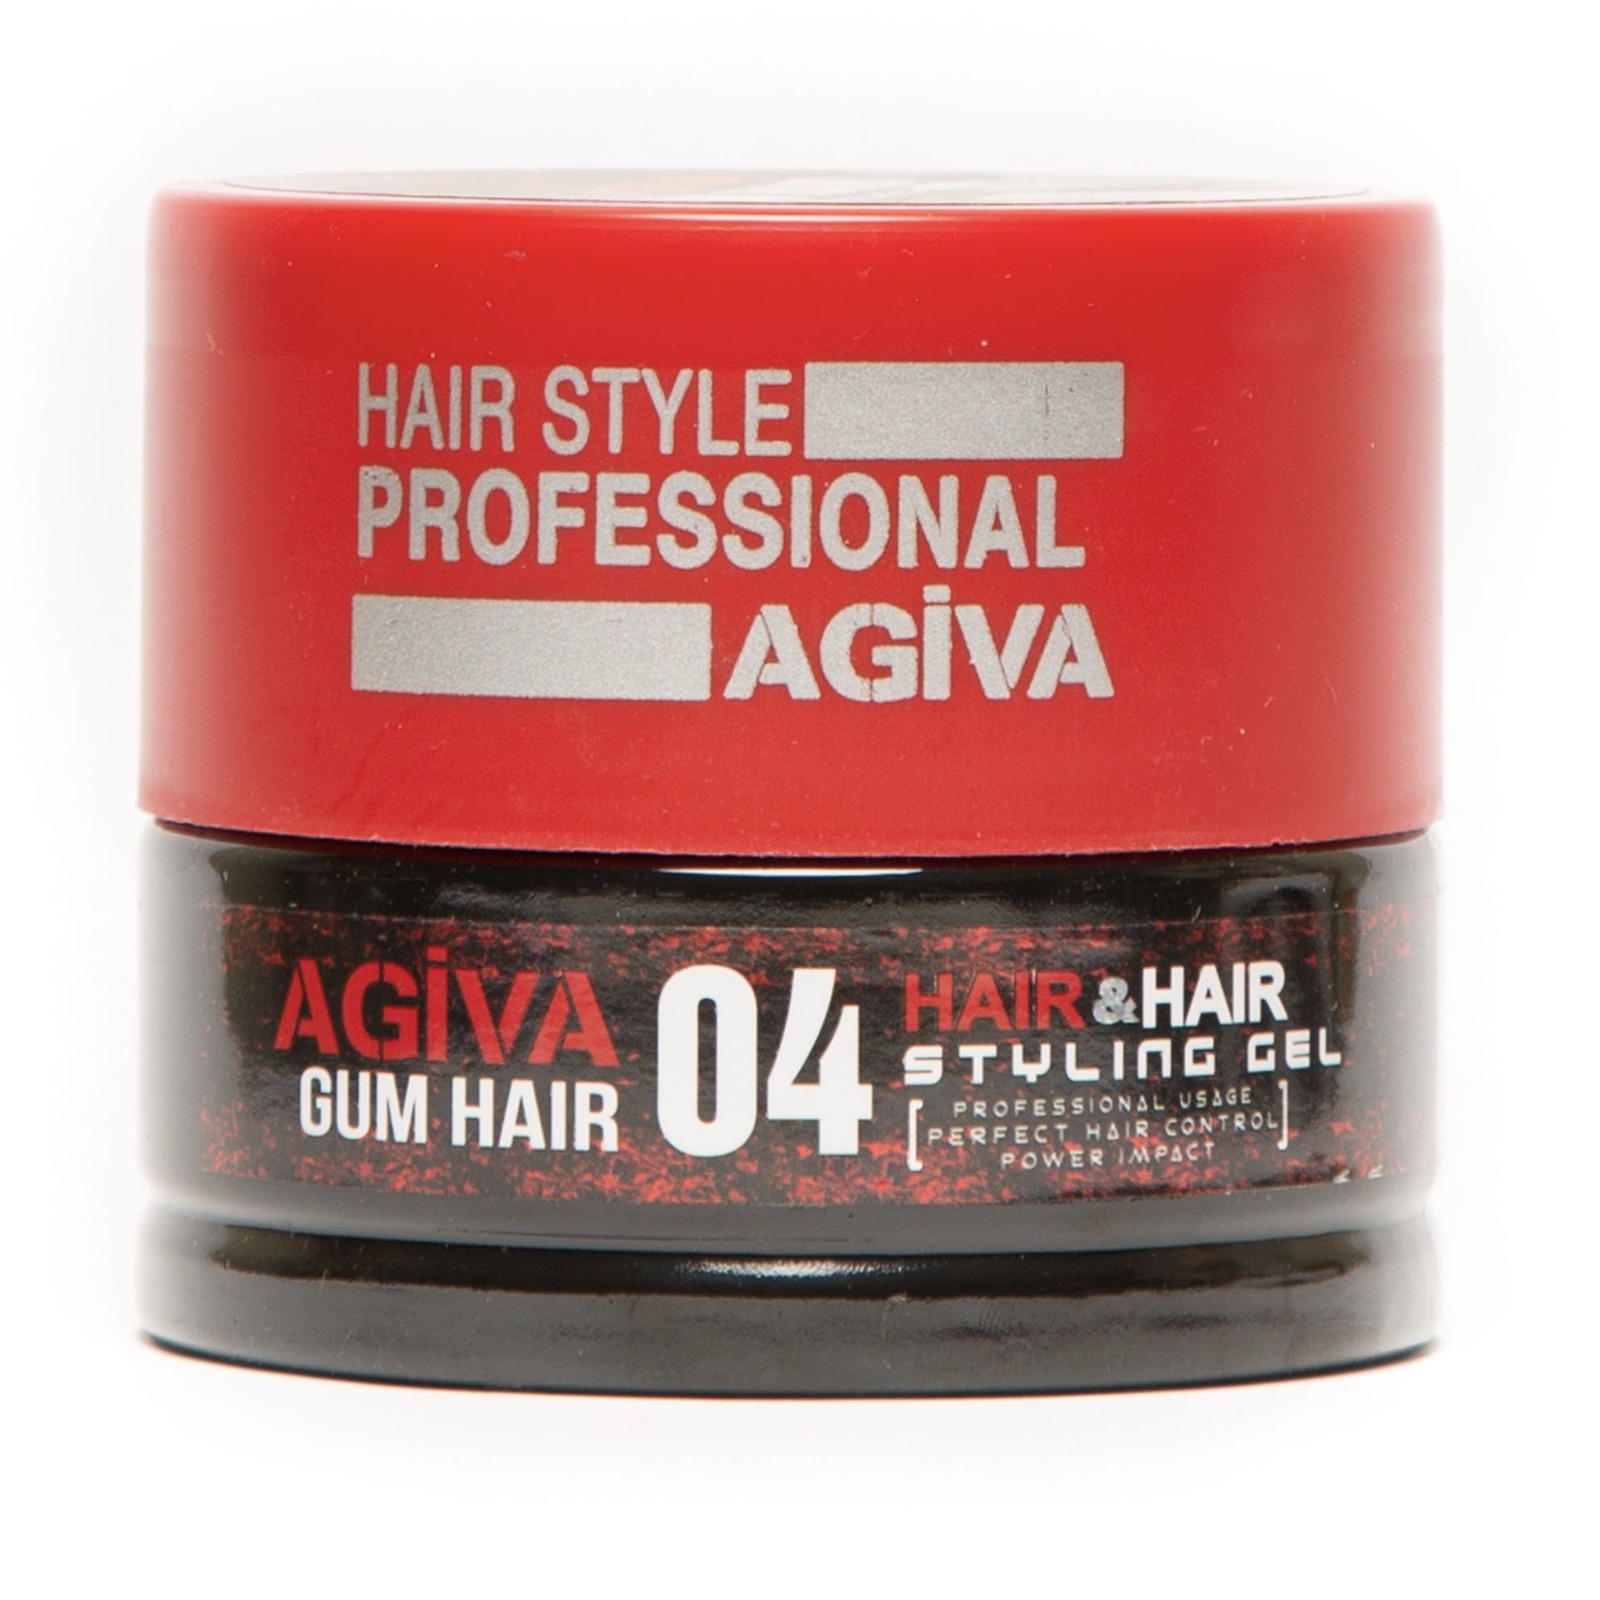 AGIVA Hair Styling Gum Hair 04 Wet Look Power Hold Gel 700 ml